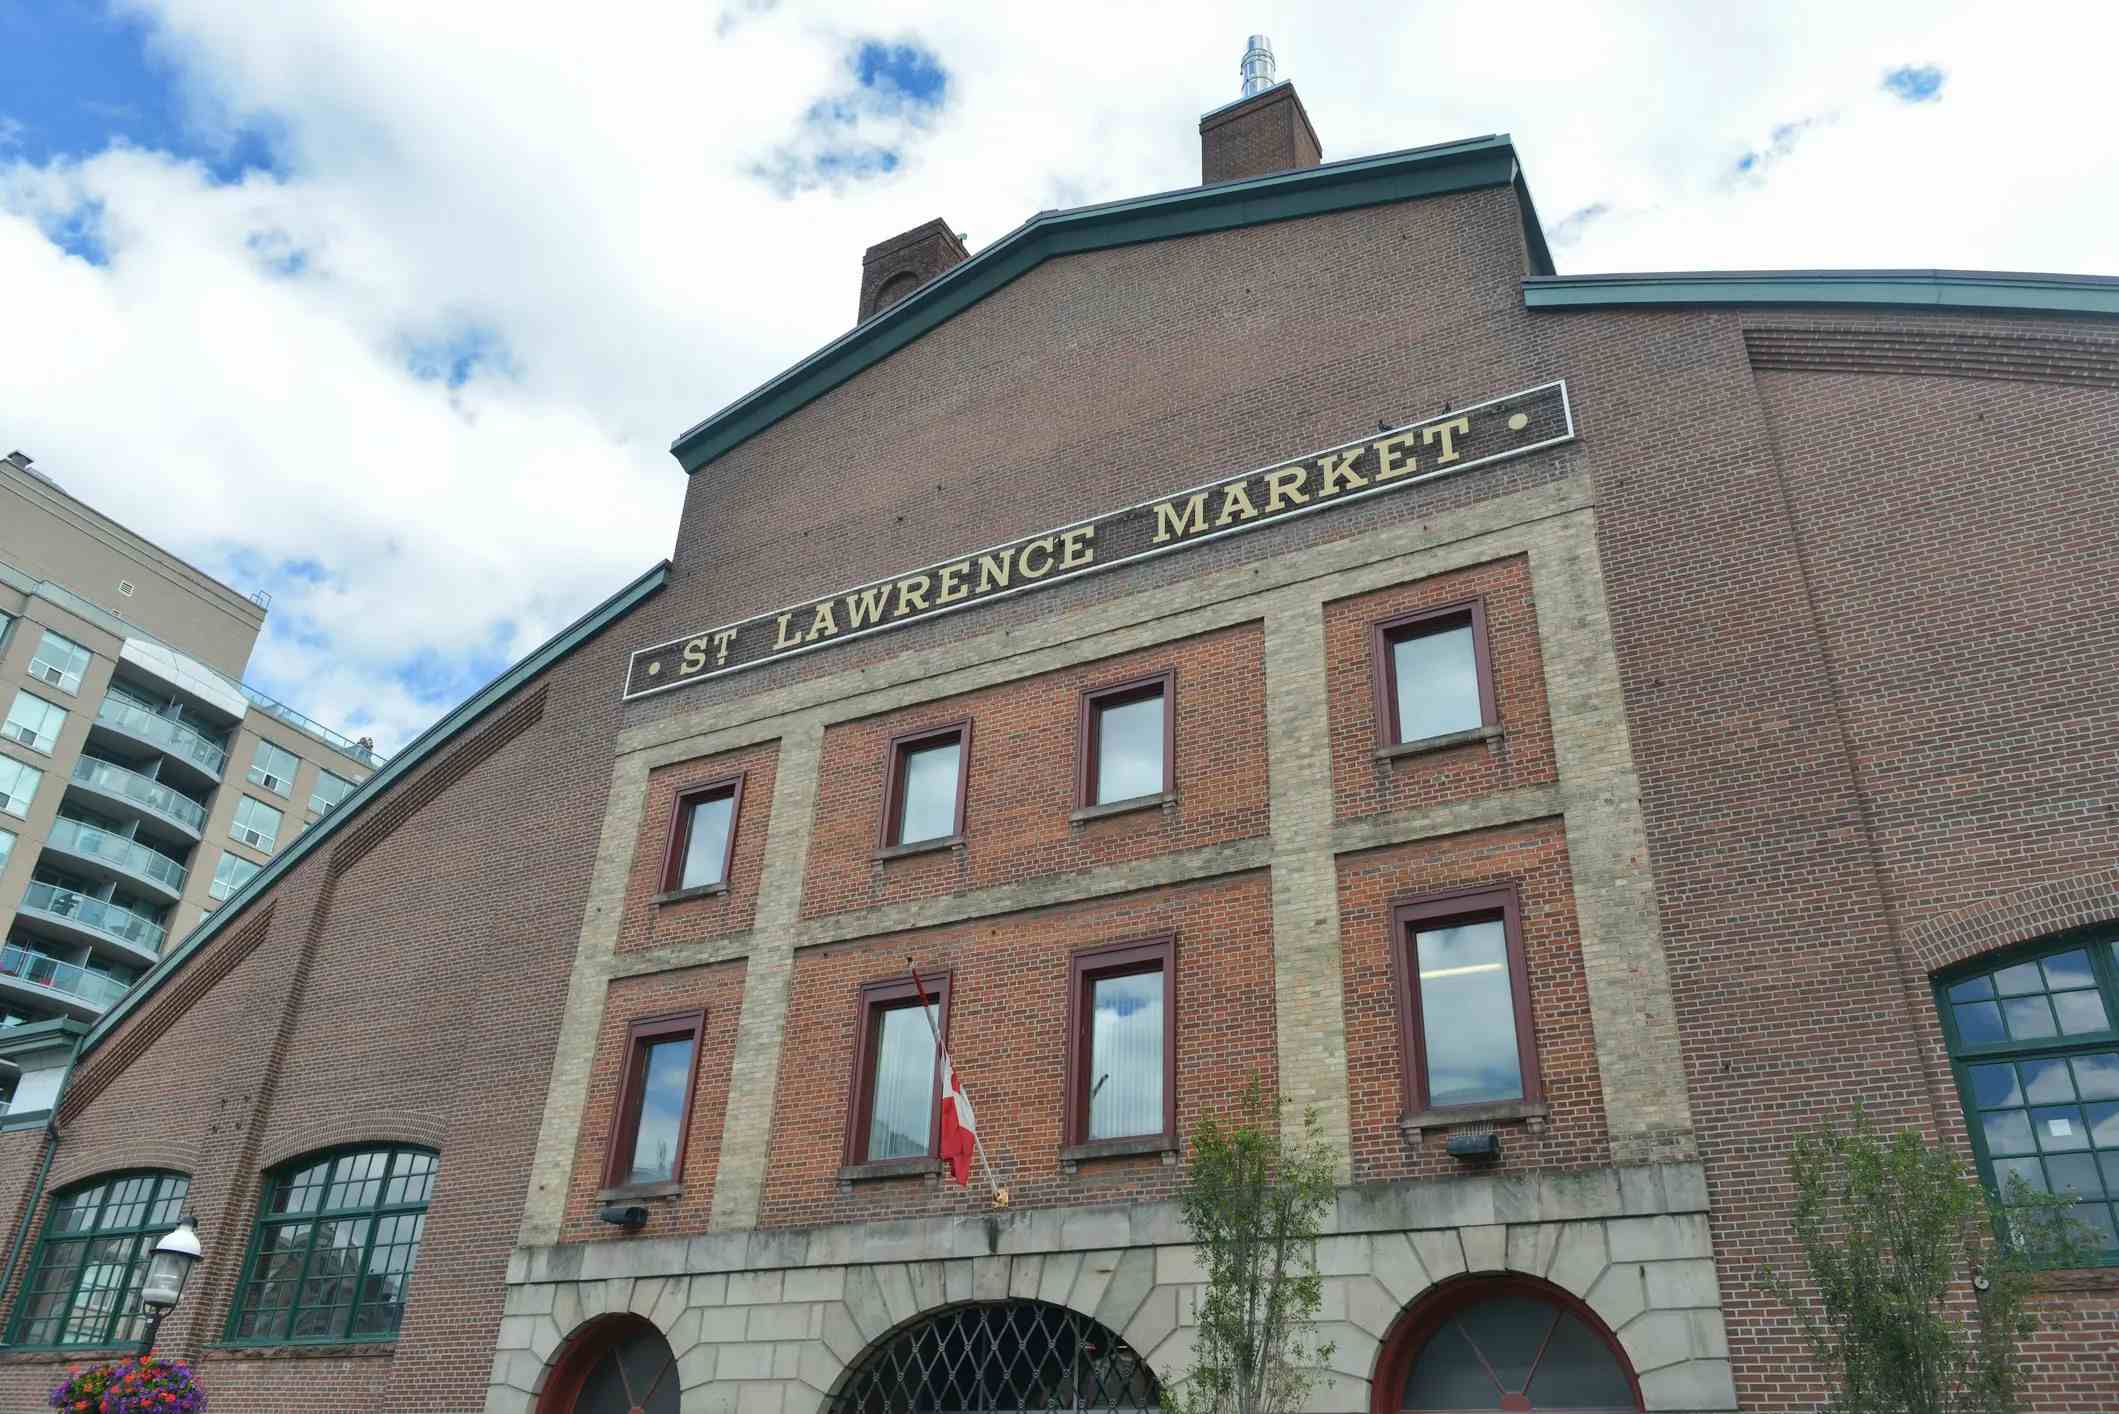 St. Lawrence Market image